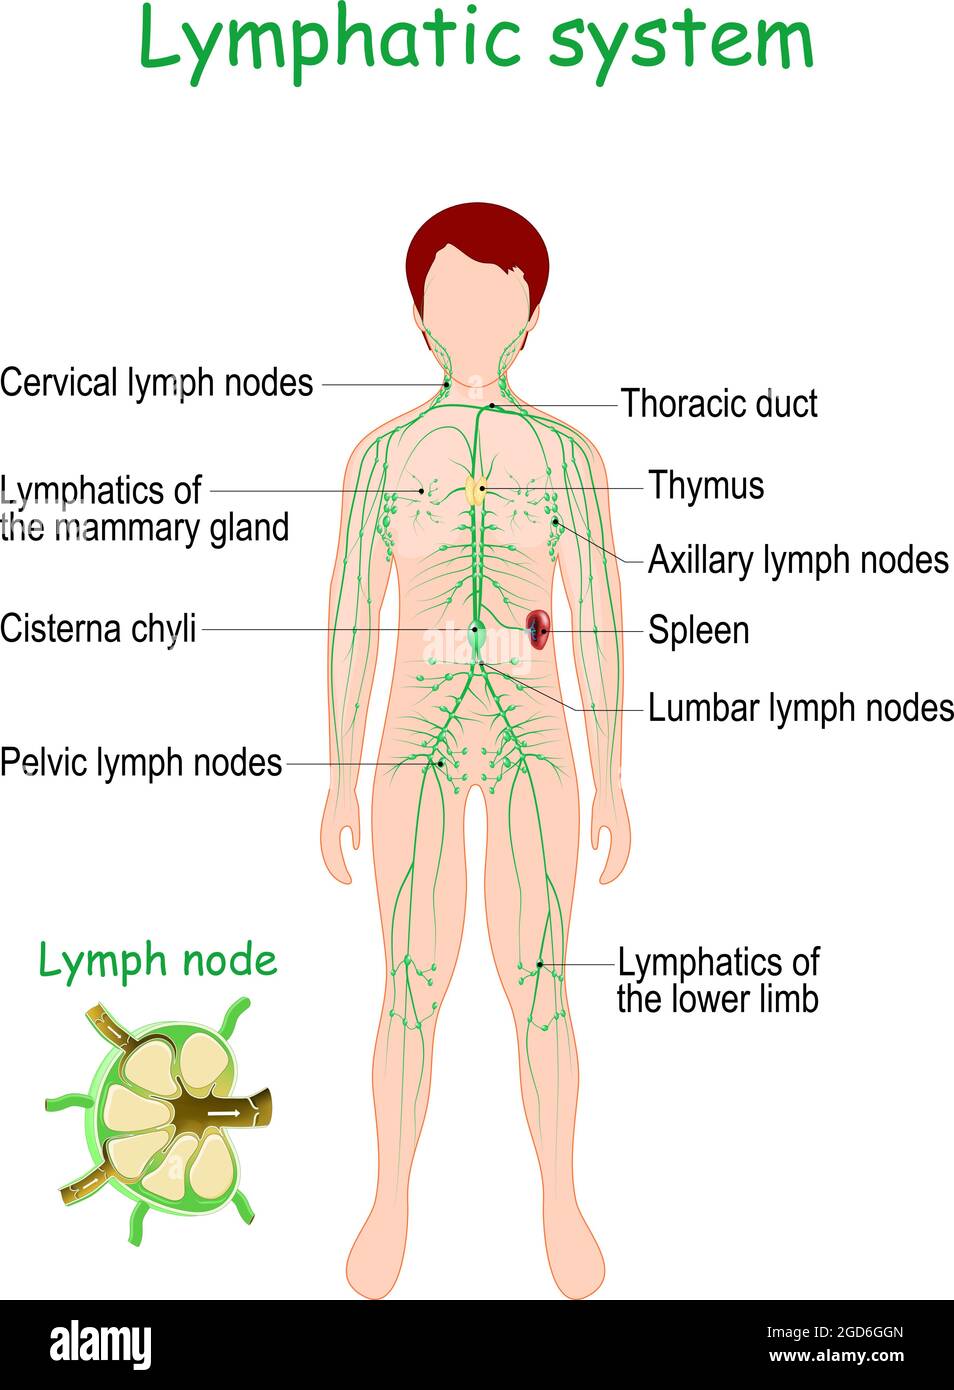 Lymphsystem. Menschlicher Körper mit lymphoiden Organen (Milz, Thymus), Lymphgefäß, Lymphknoten und Cisterna chyli. Vektorgrafik Stock Vektor